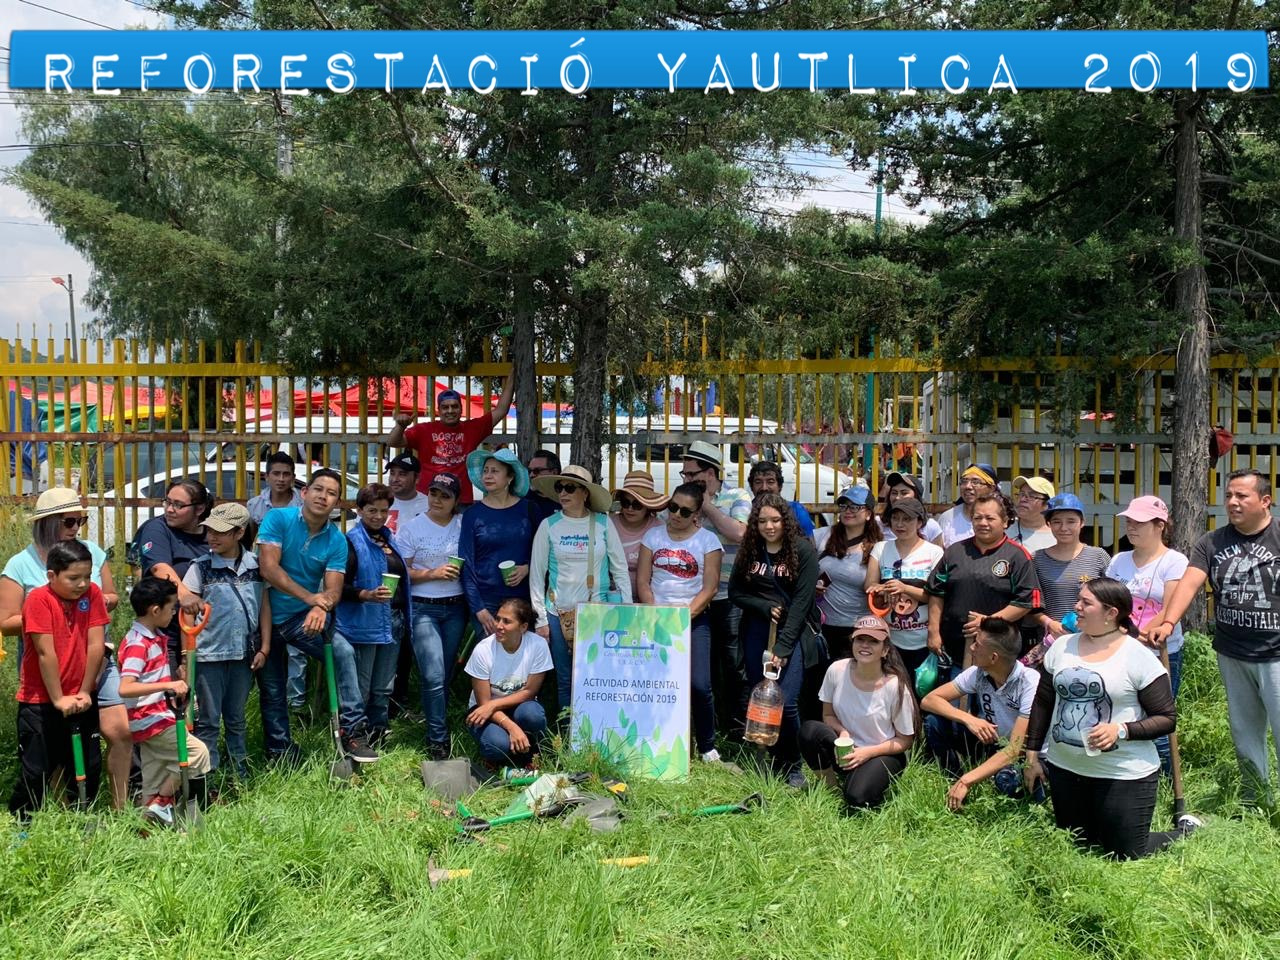 Evento reforestacion yautica 2019